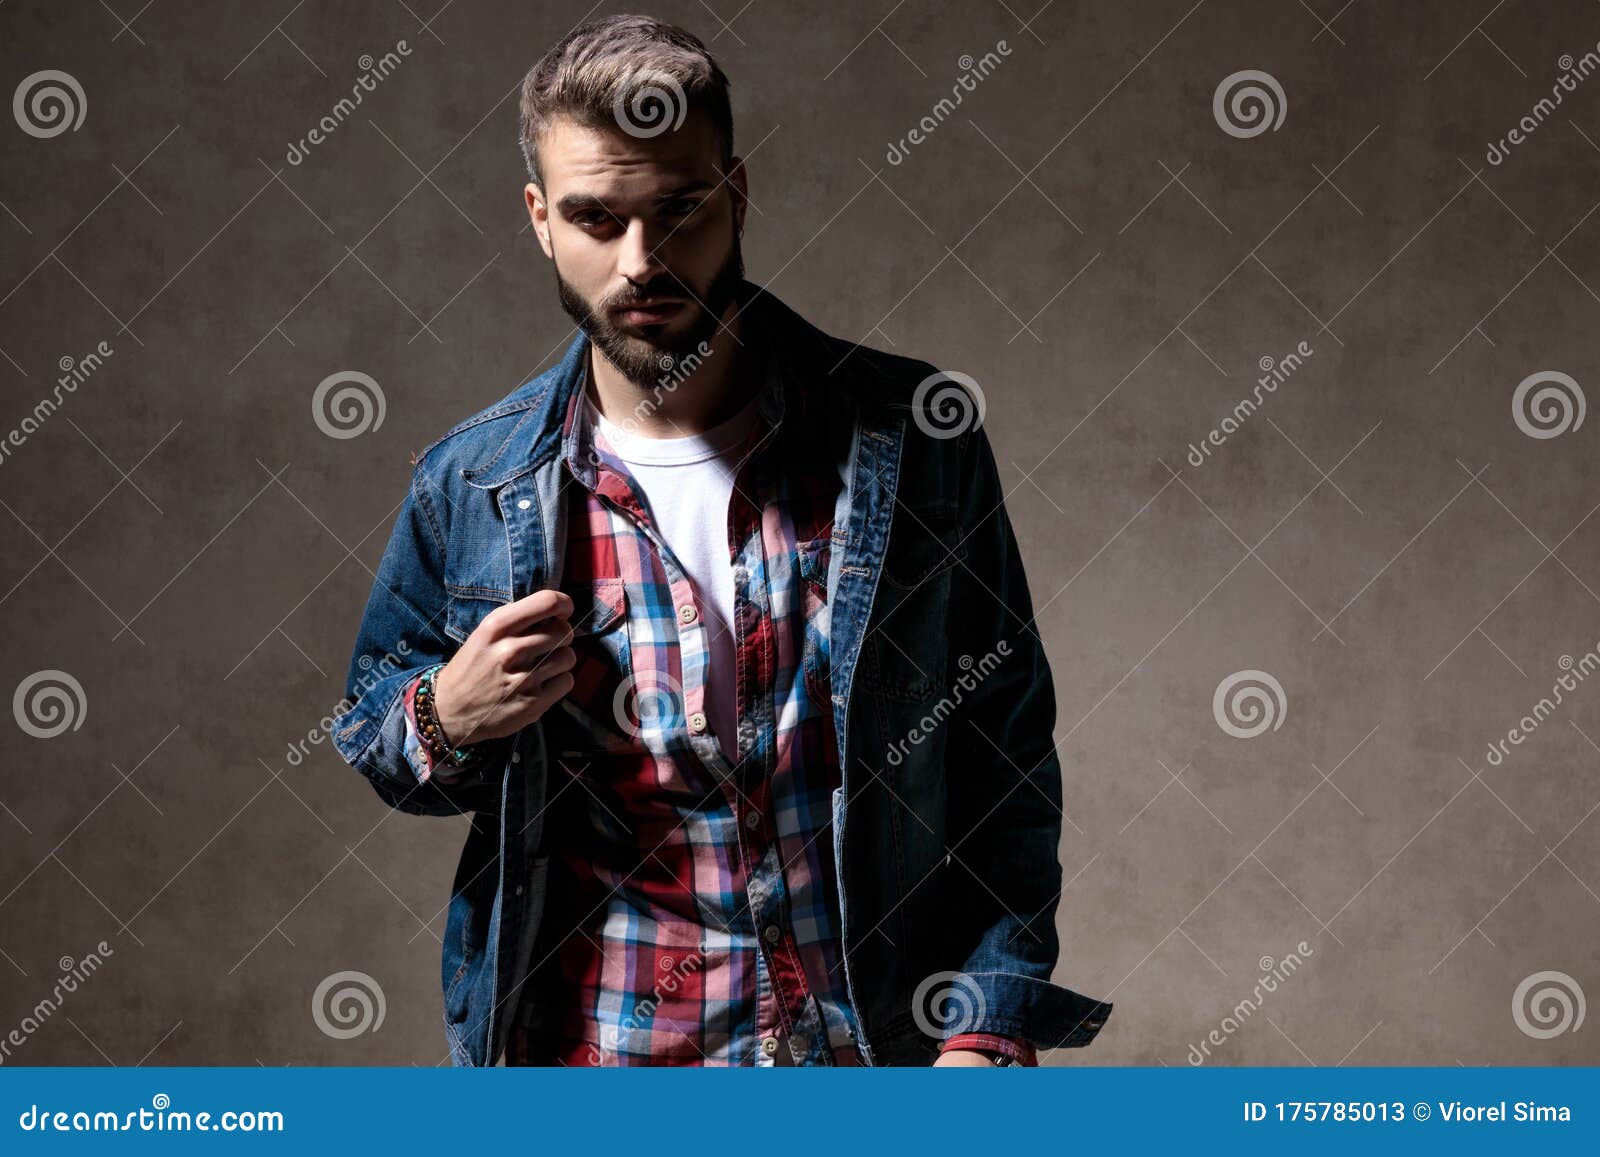 Motivated Model Adjusting His Jacket Stock Image - Image of beard ...